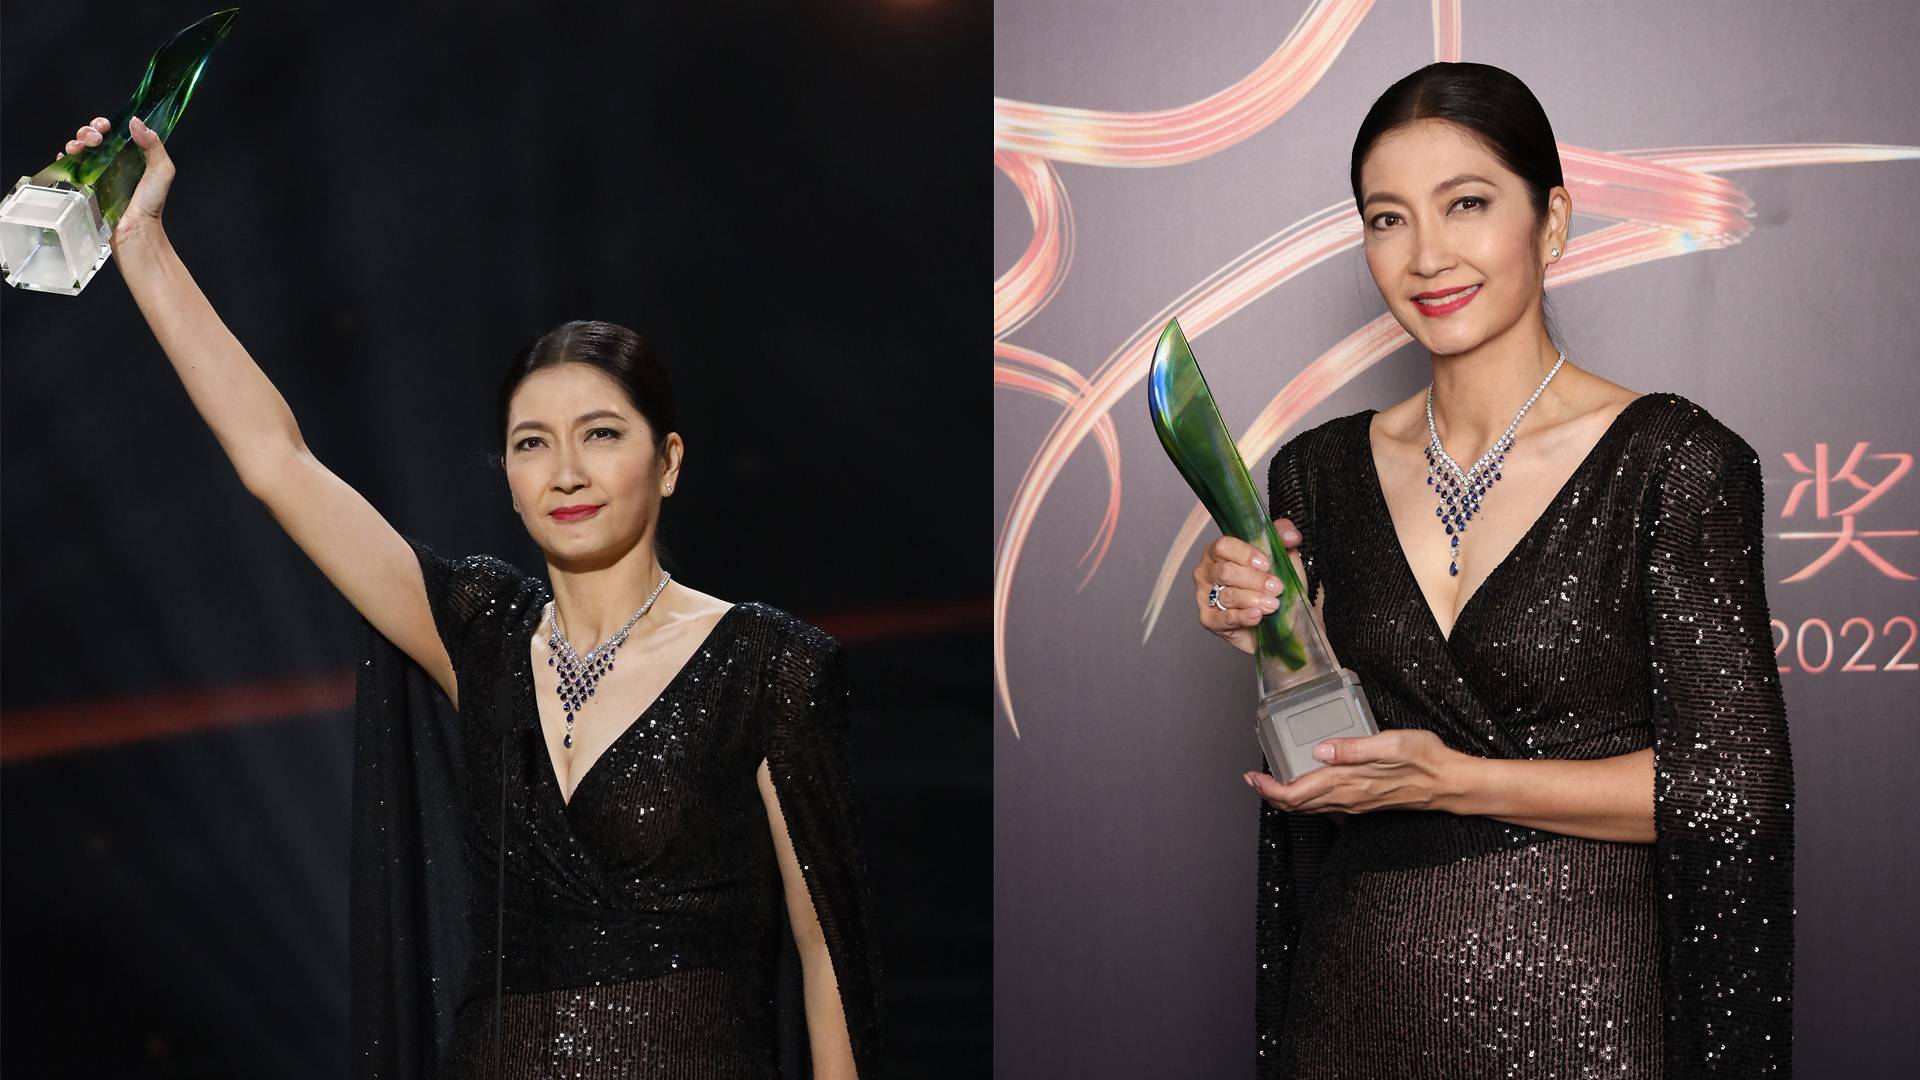 Star Awards Best Actress winner Huang Biren had COVID-19 days before event